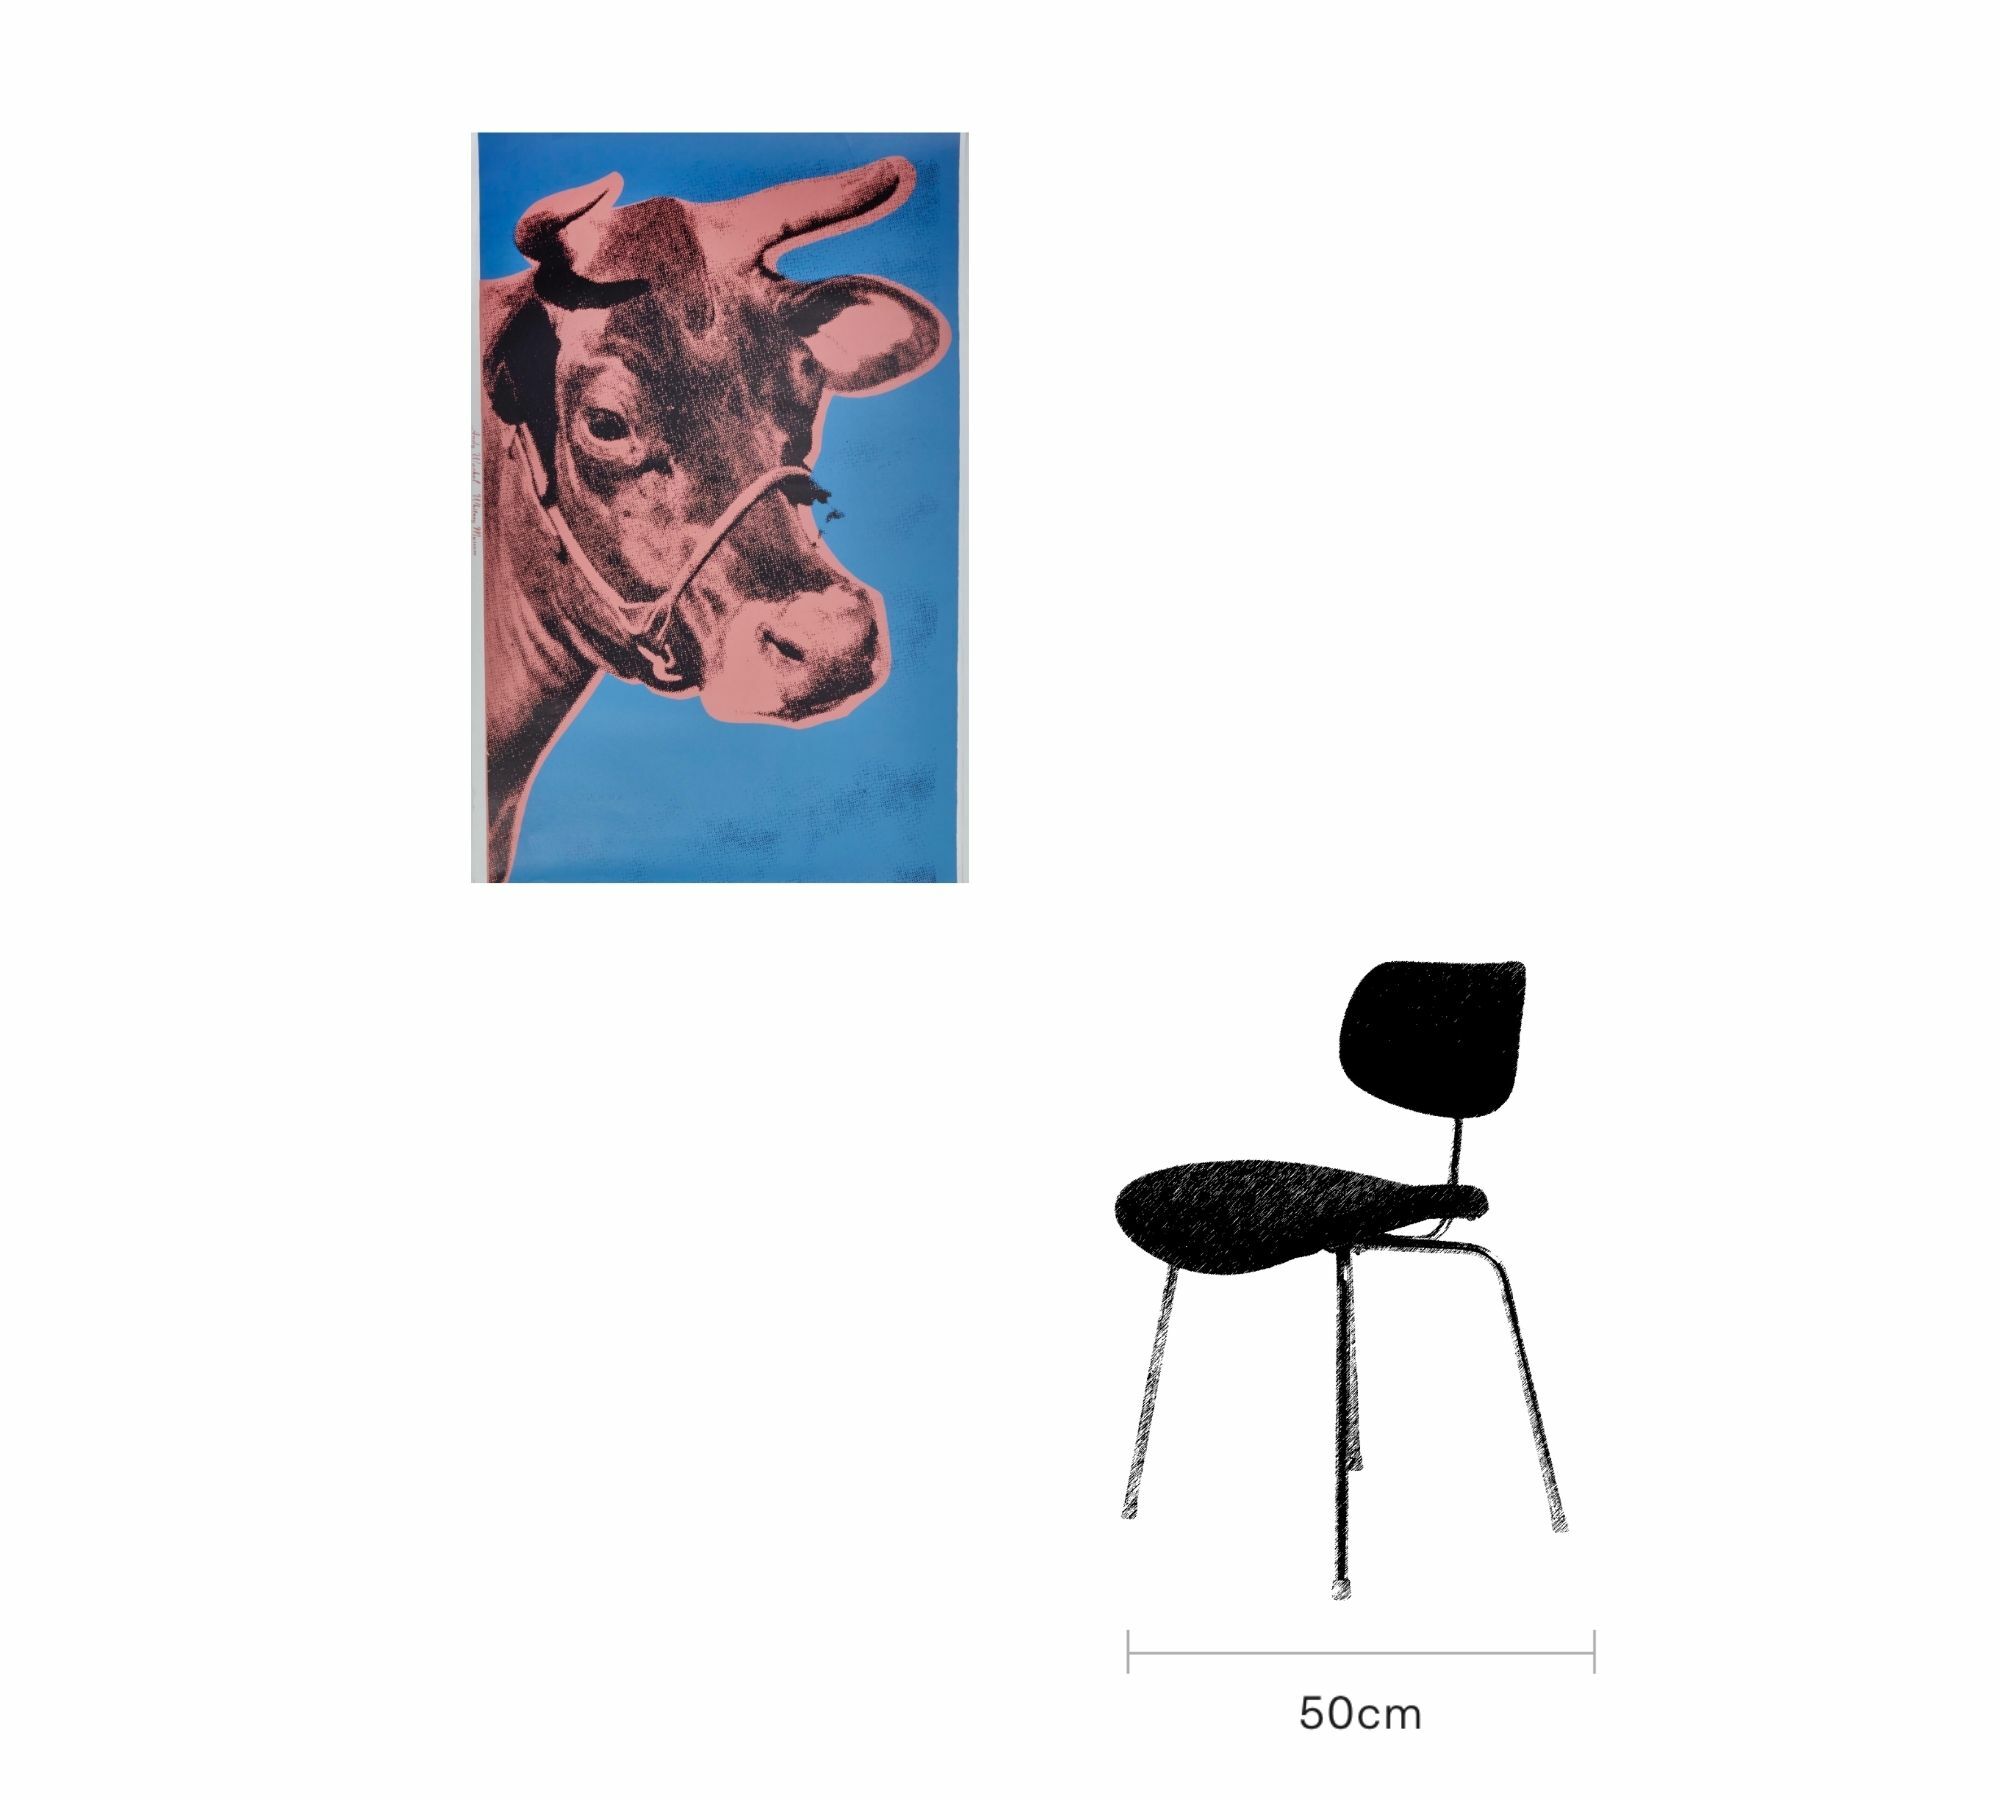 Cow, 1976 - Andy Warhol 85 x 53 cm 4